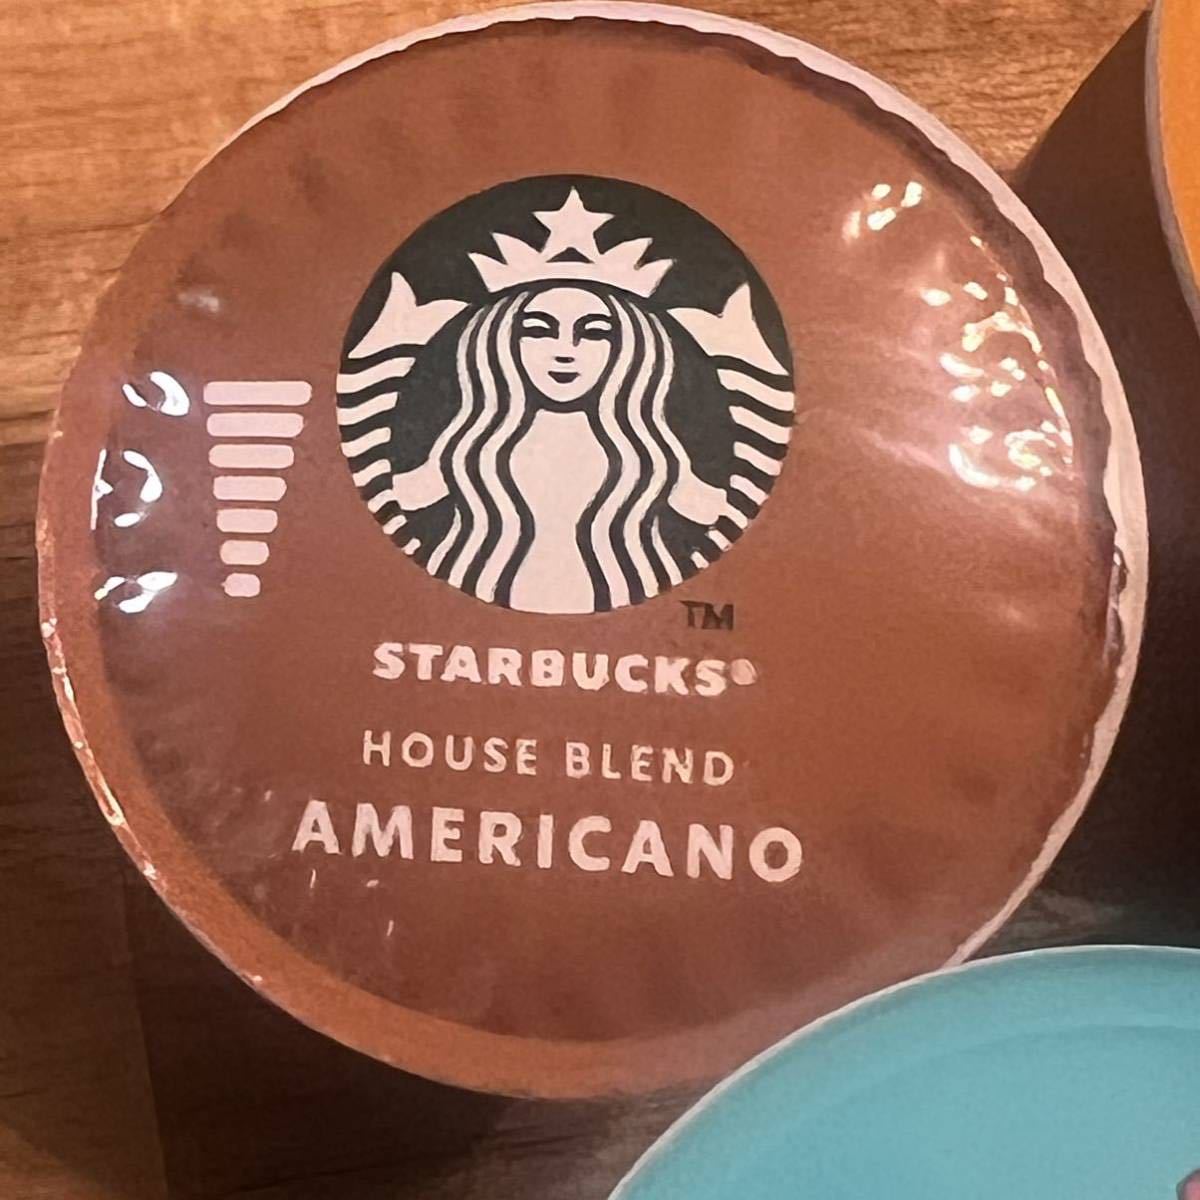 nes Cafe Dolce Gusto Capsule 5 piece set Starbucks America -no caramel maki art Flat white Ricci Blend 